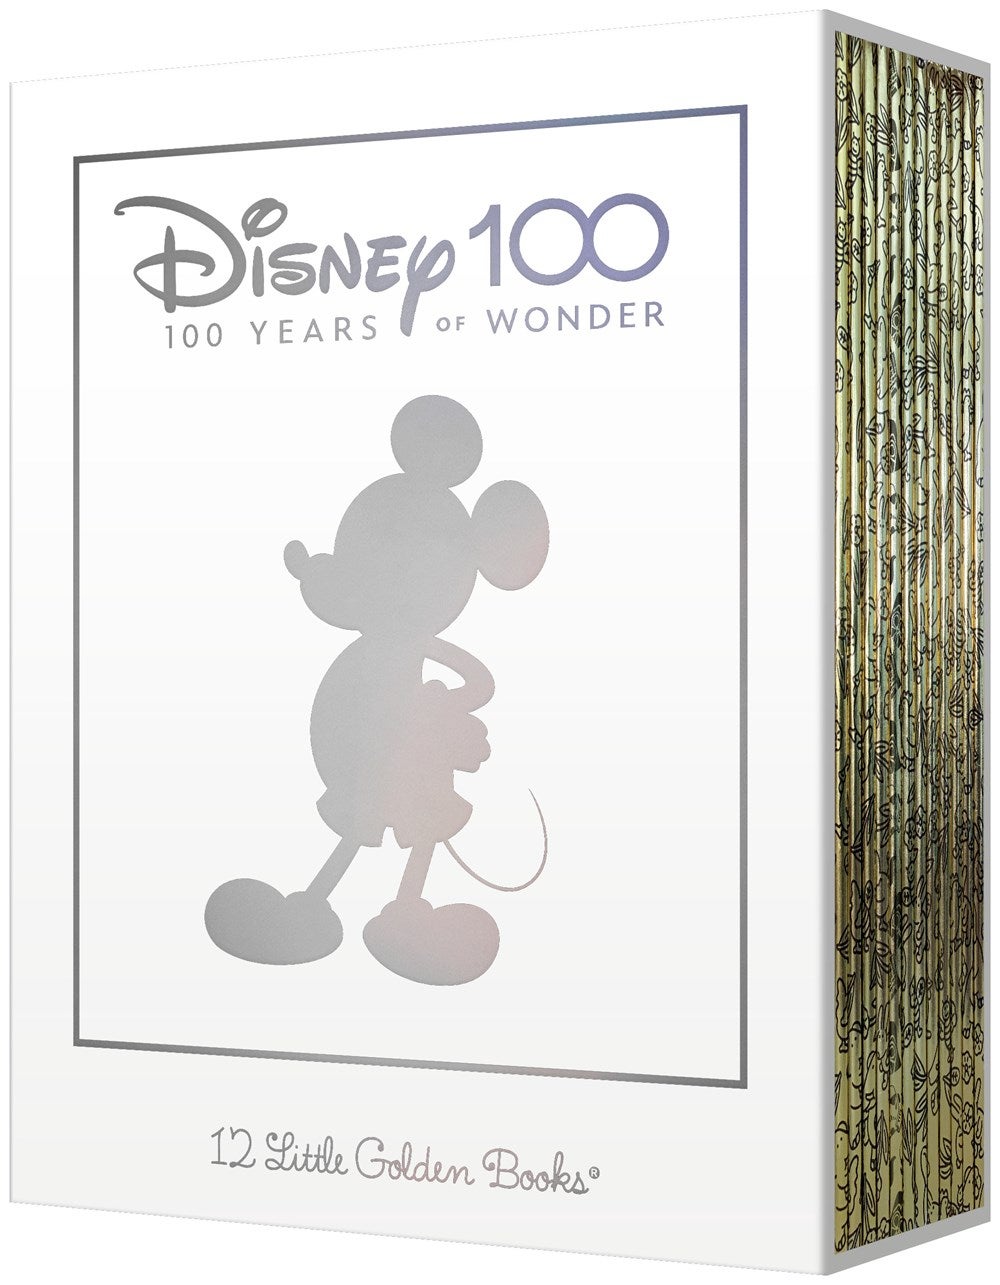 Disney’s 100th Anniversary Boxed Set of 12 Little Golden Books